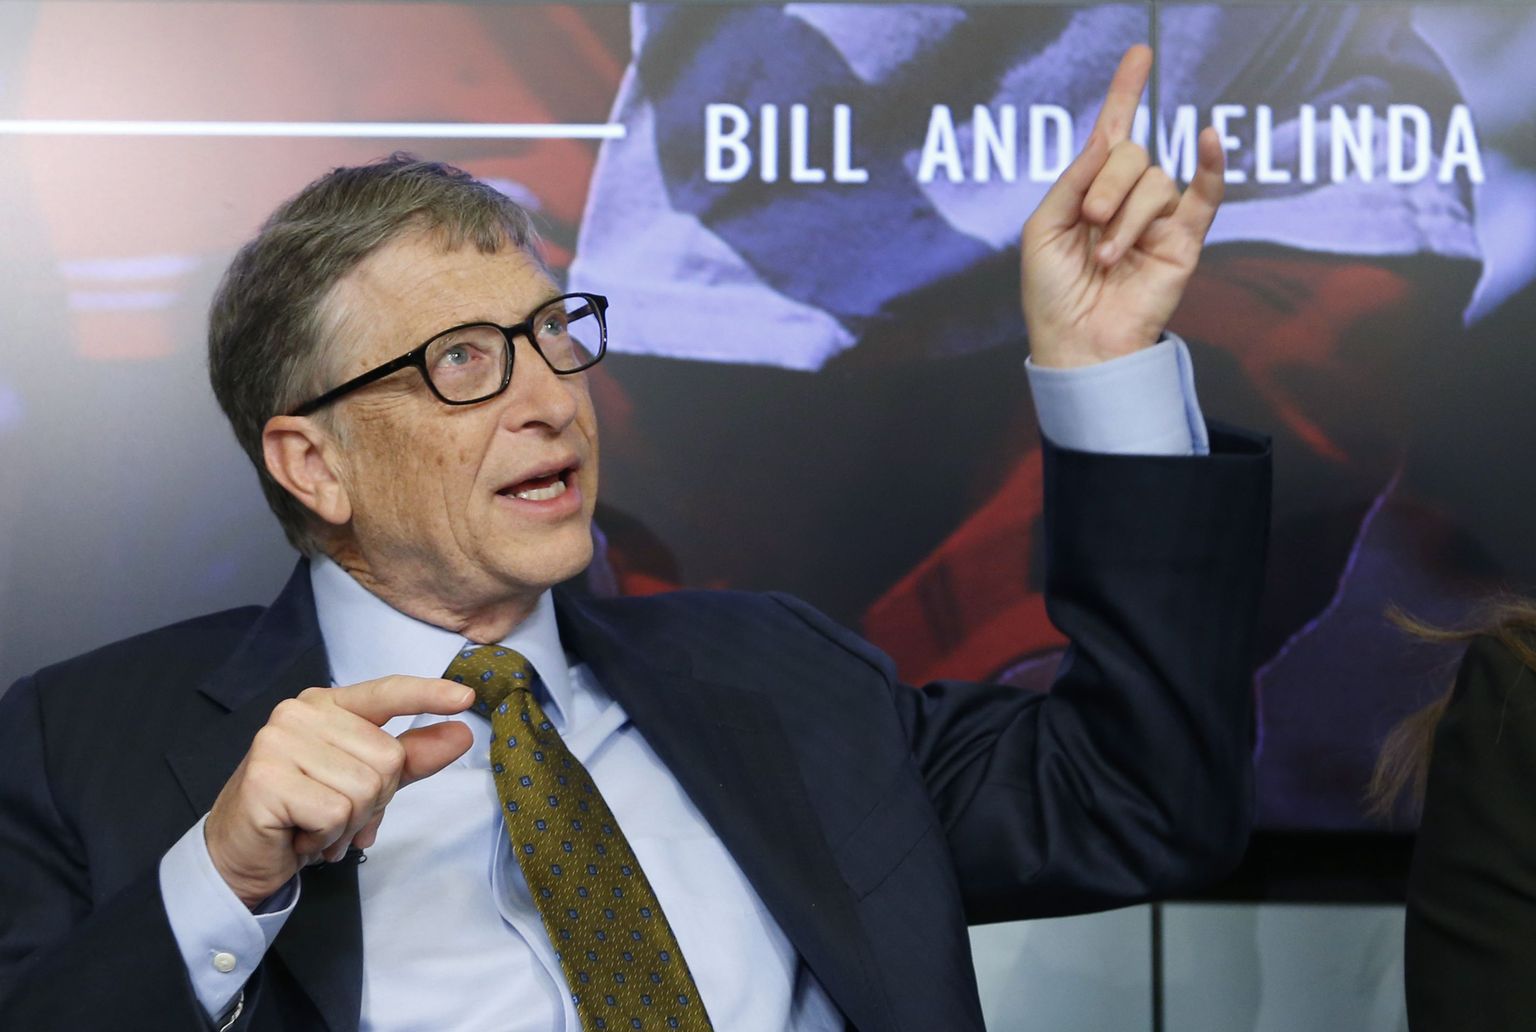 Maailma rikkaim inimene on Bill Gates